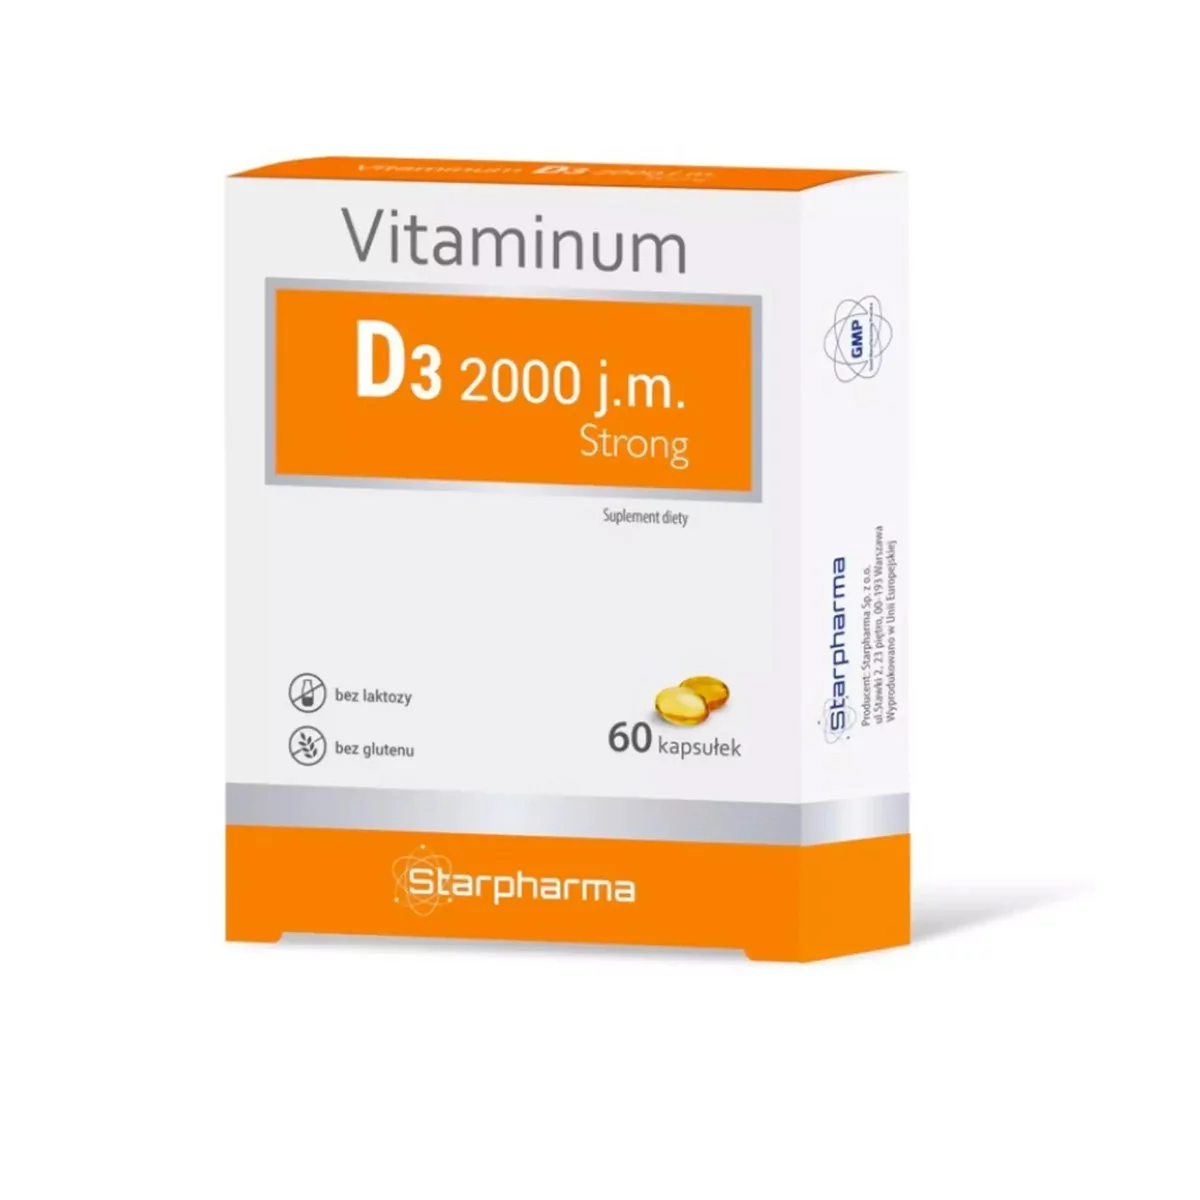 Starpharma Vitaminum D3 2000 j.m Strong x 60 kaps